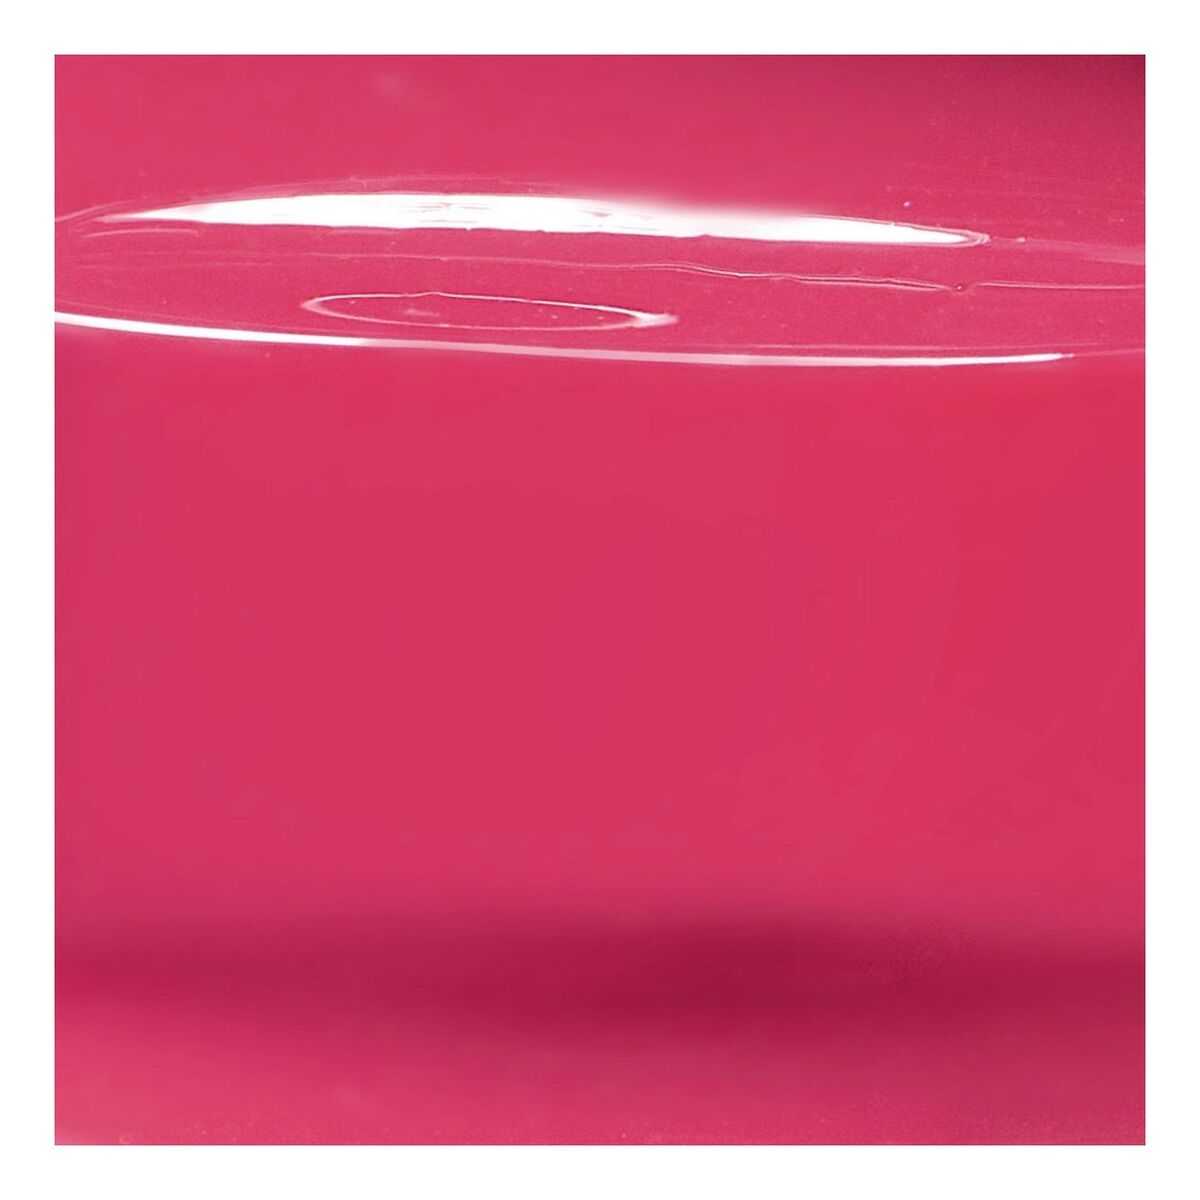 Lippgloss Rouge Signature L'Oréal Paris Erzeugt Volumen 408-accentua - CA International 